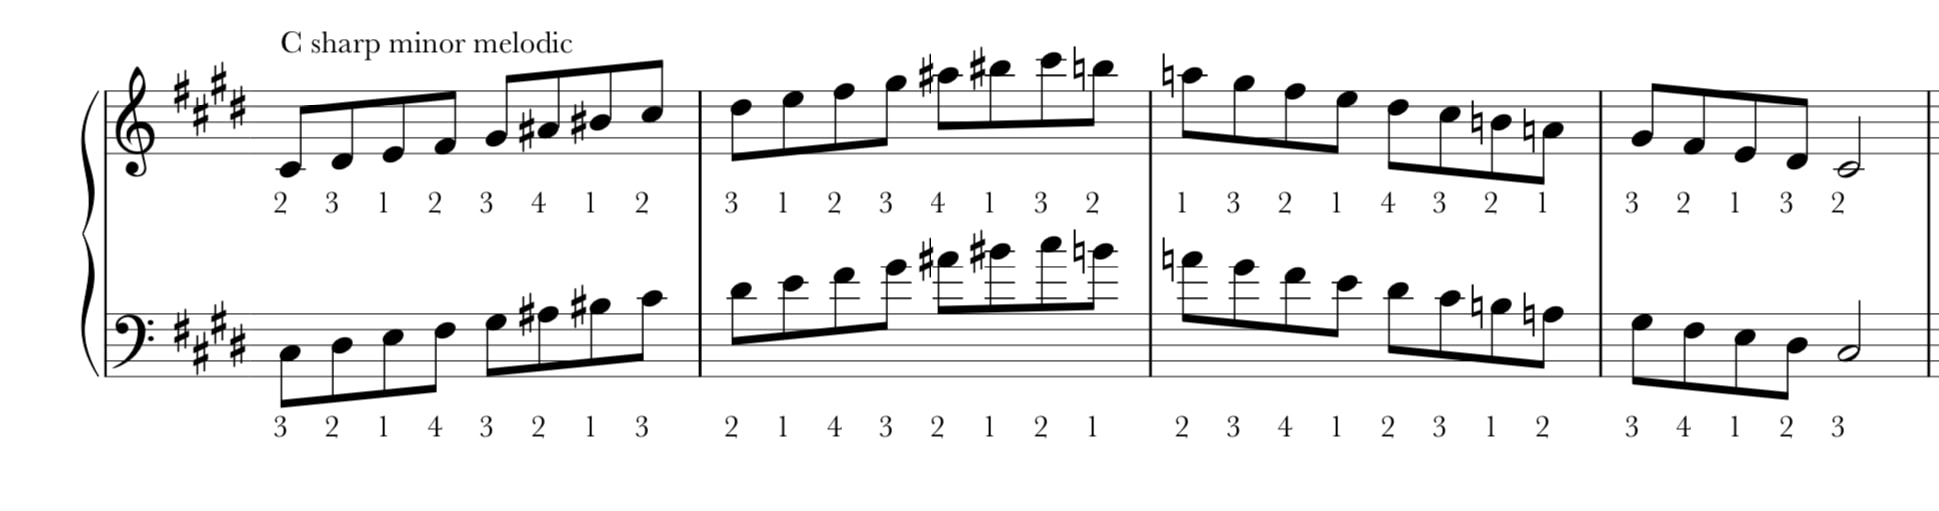 C sharp melodic minor scale